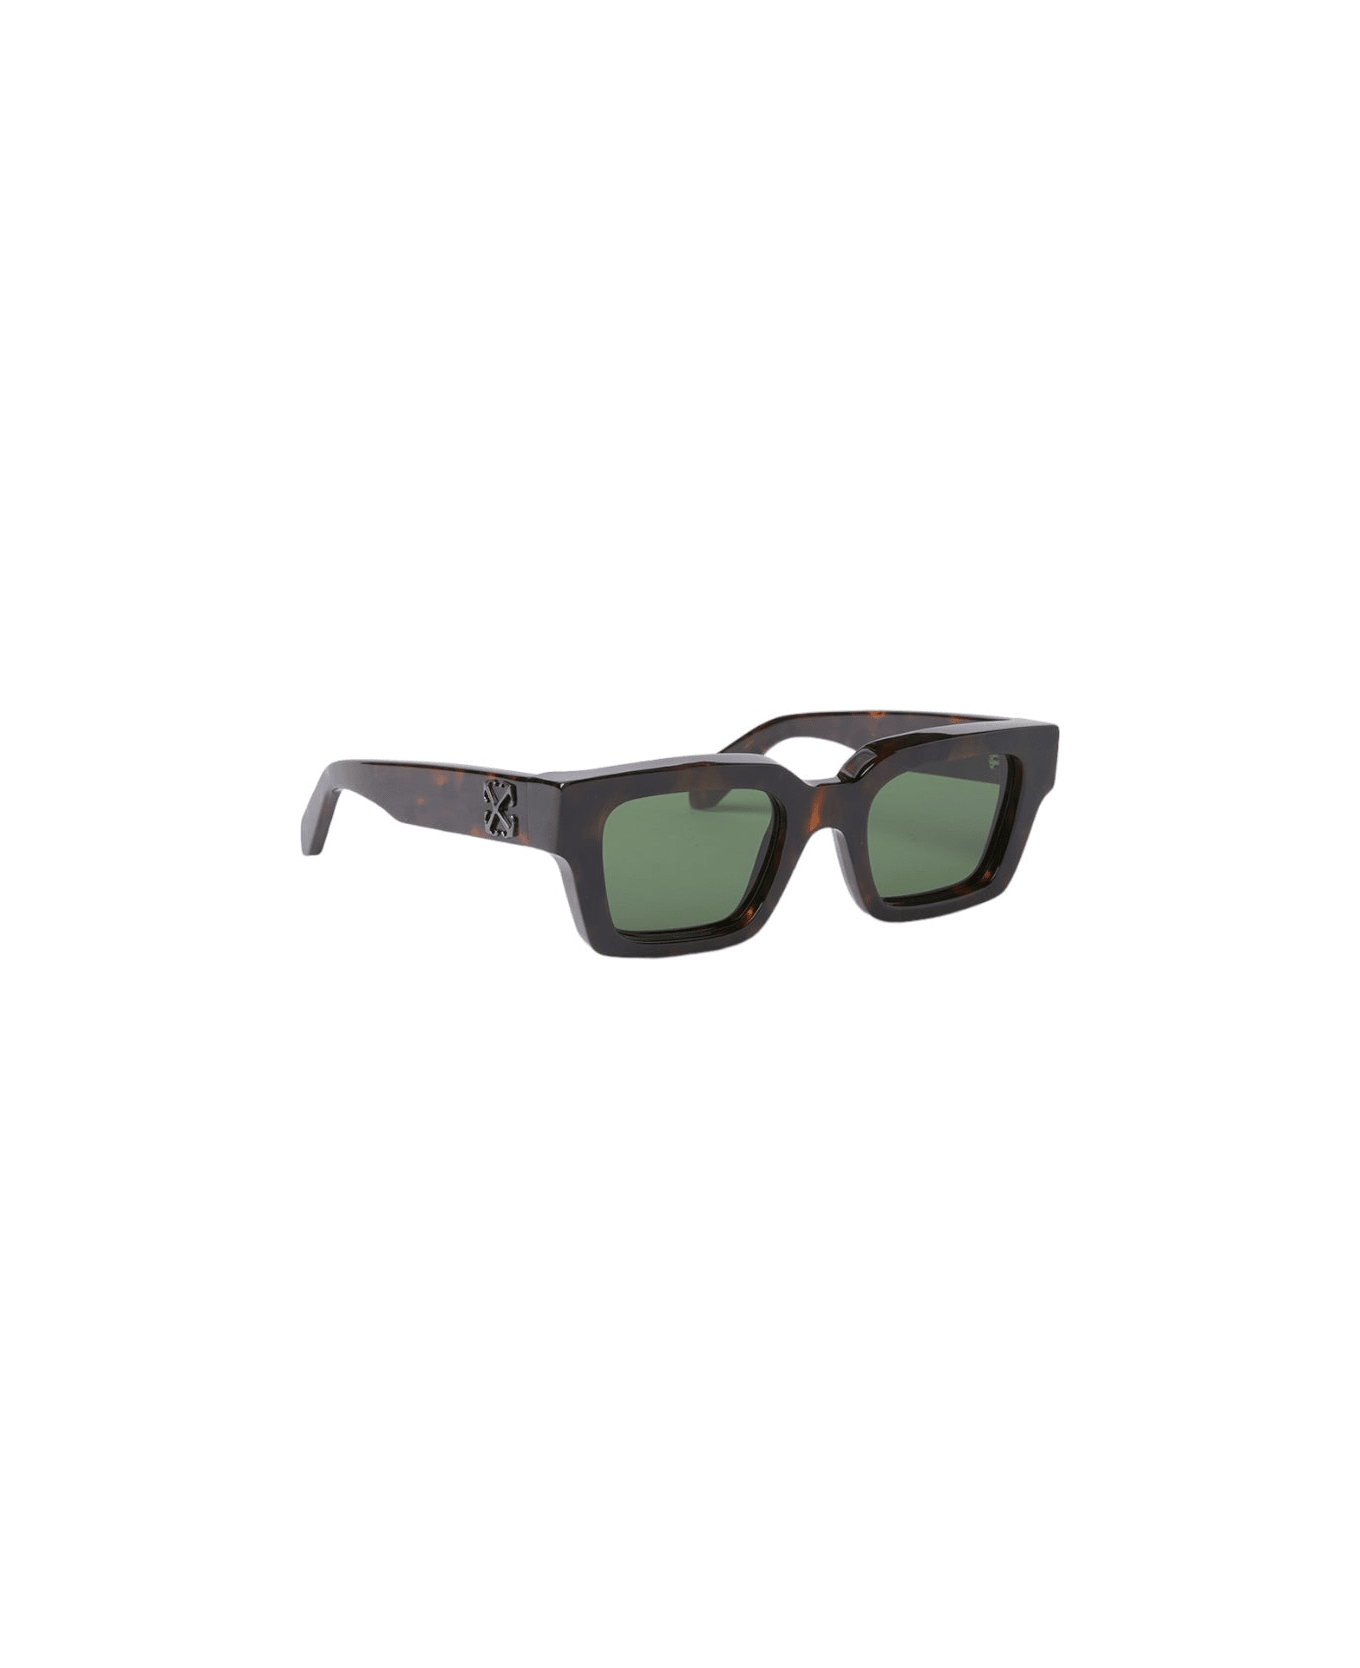 Off-White Virgil - Size M Sunglasses サングラス